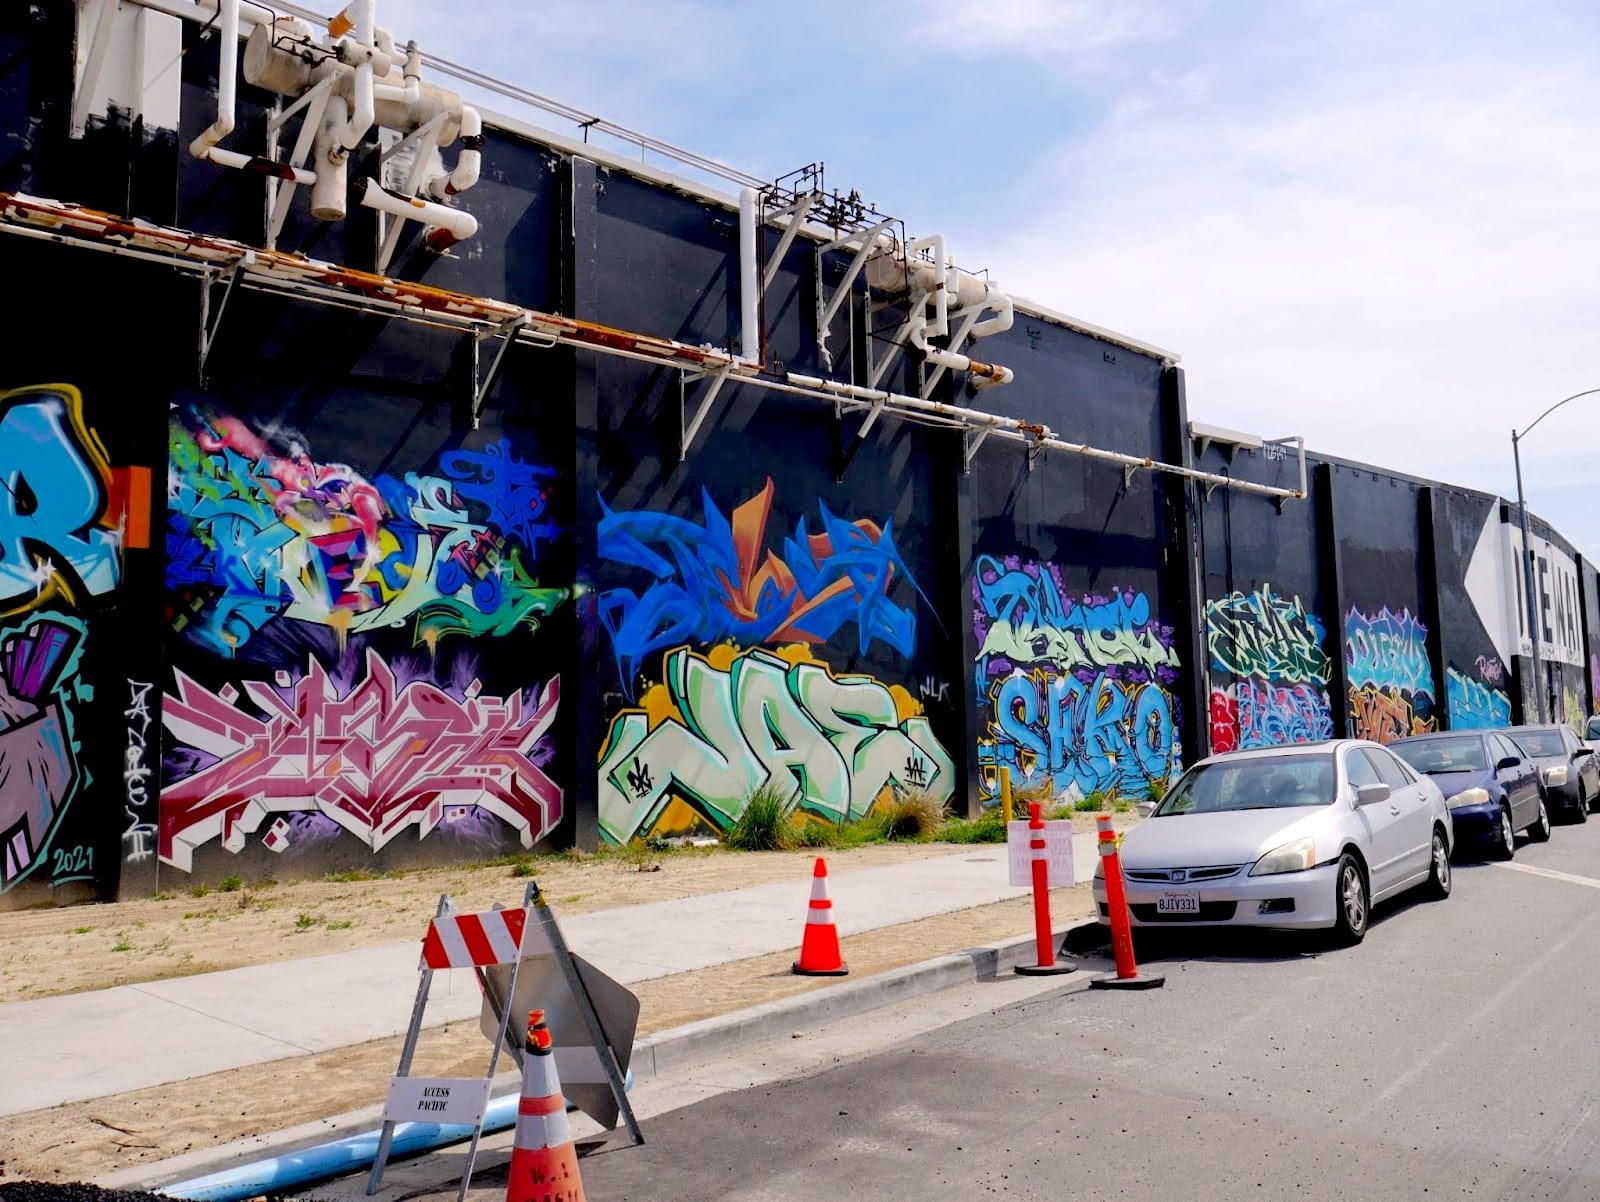 Dozens of graffiti tags line a wall